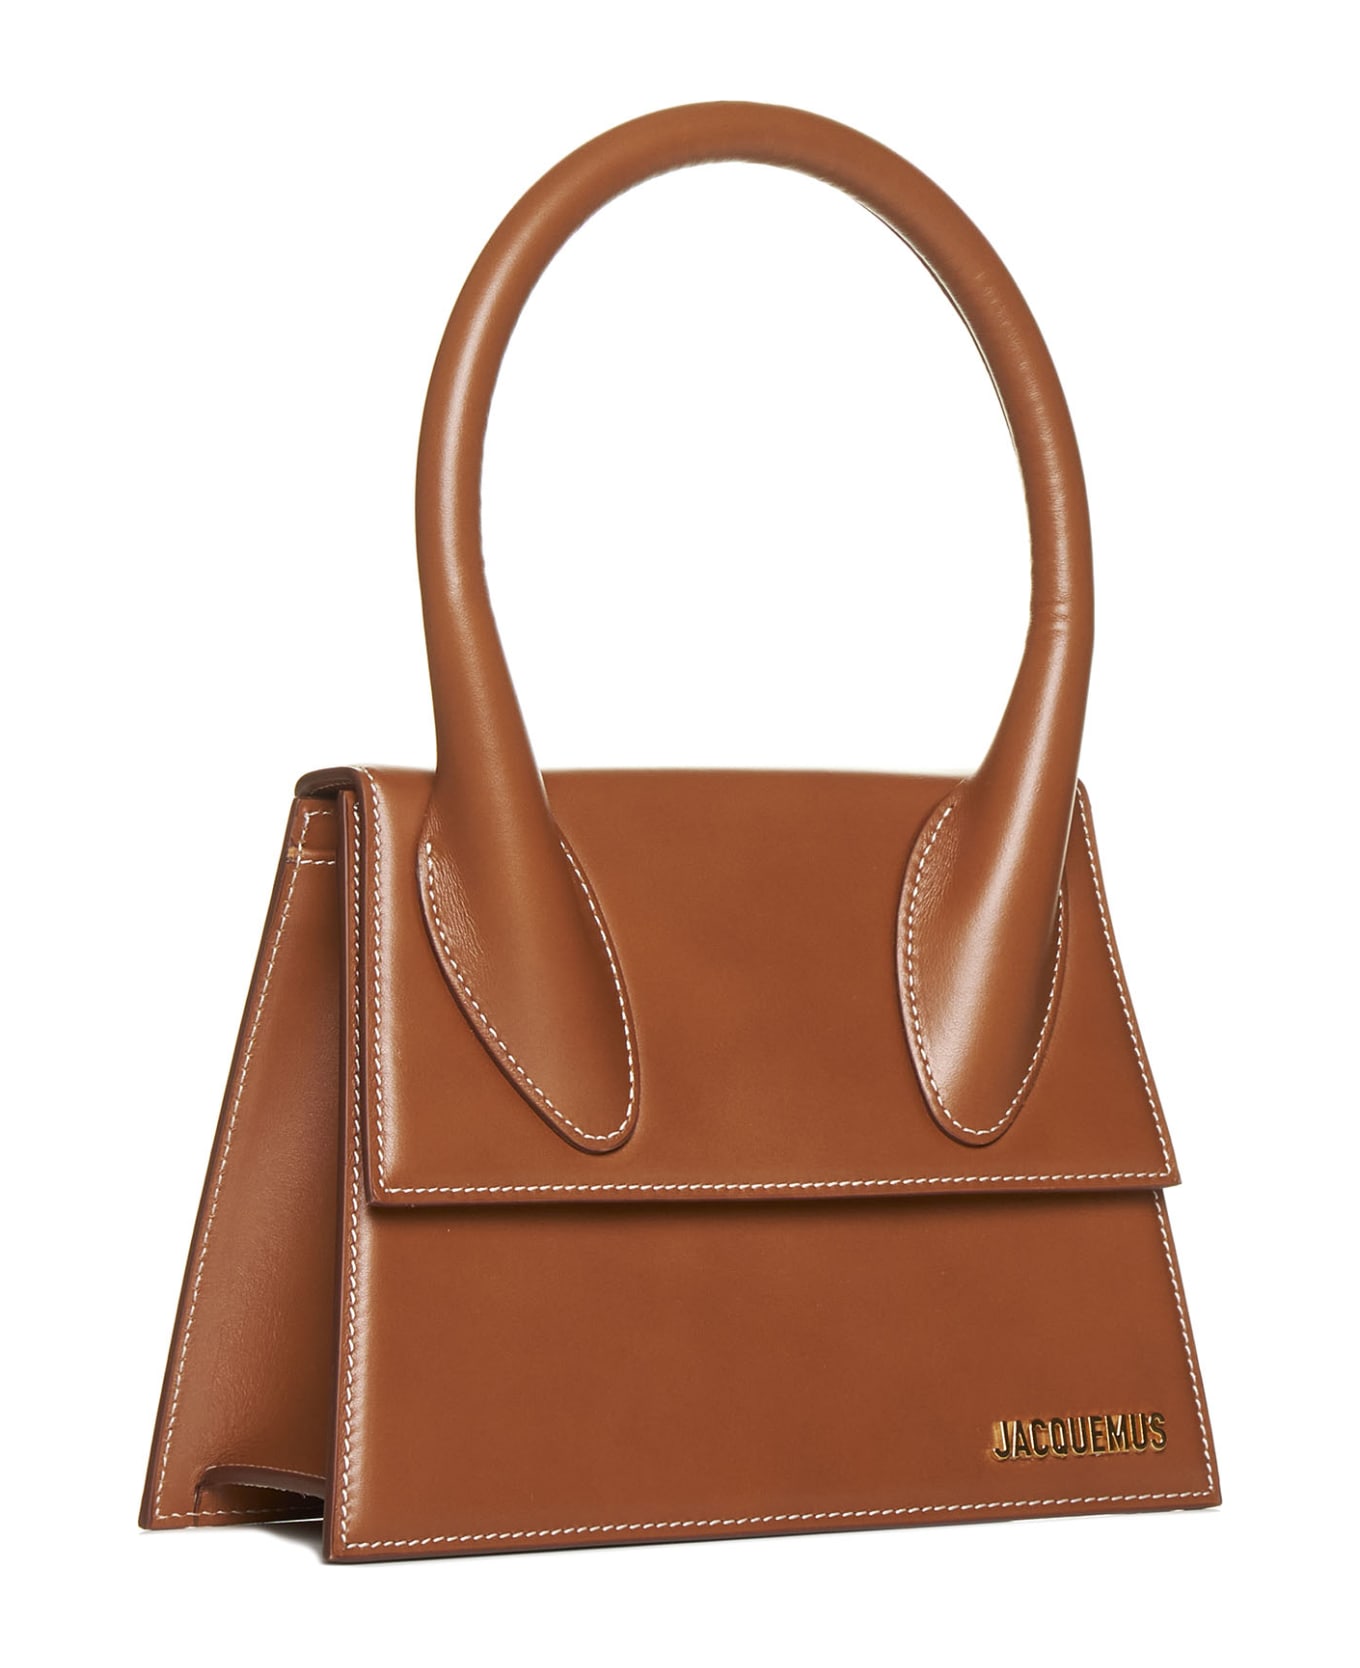 Jacquemus Le Grand Chiquito Handbag - Light brown トートバッグ